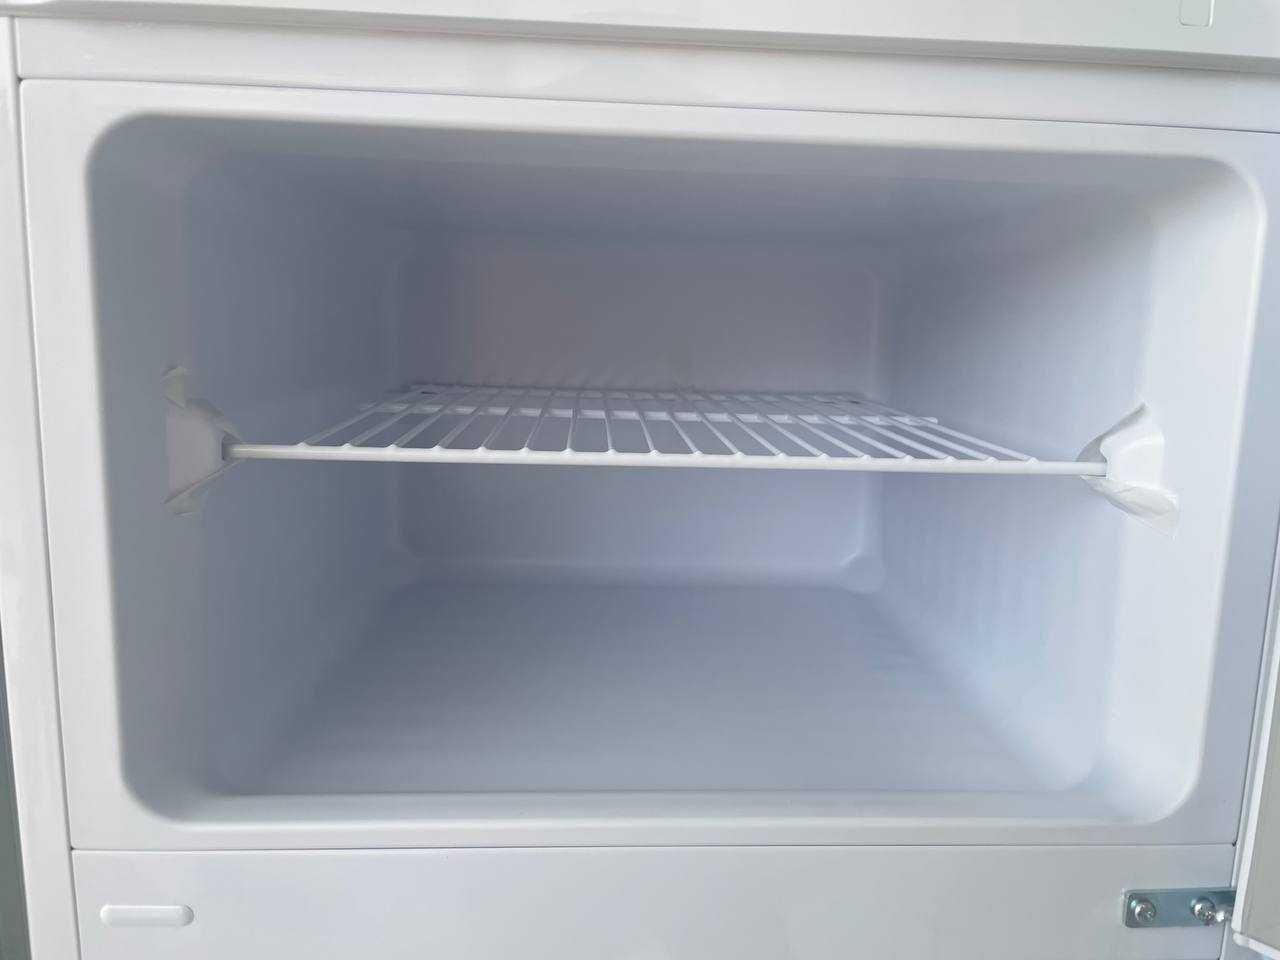 Холодильник Beko RDSK 240M00